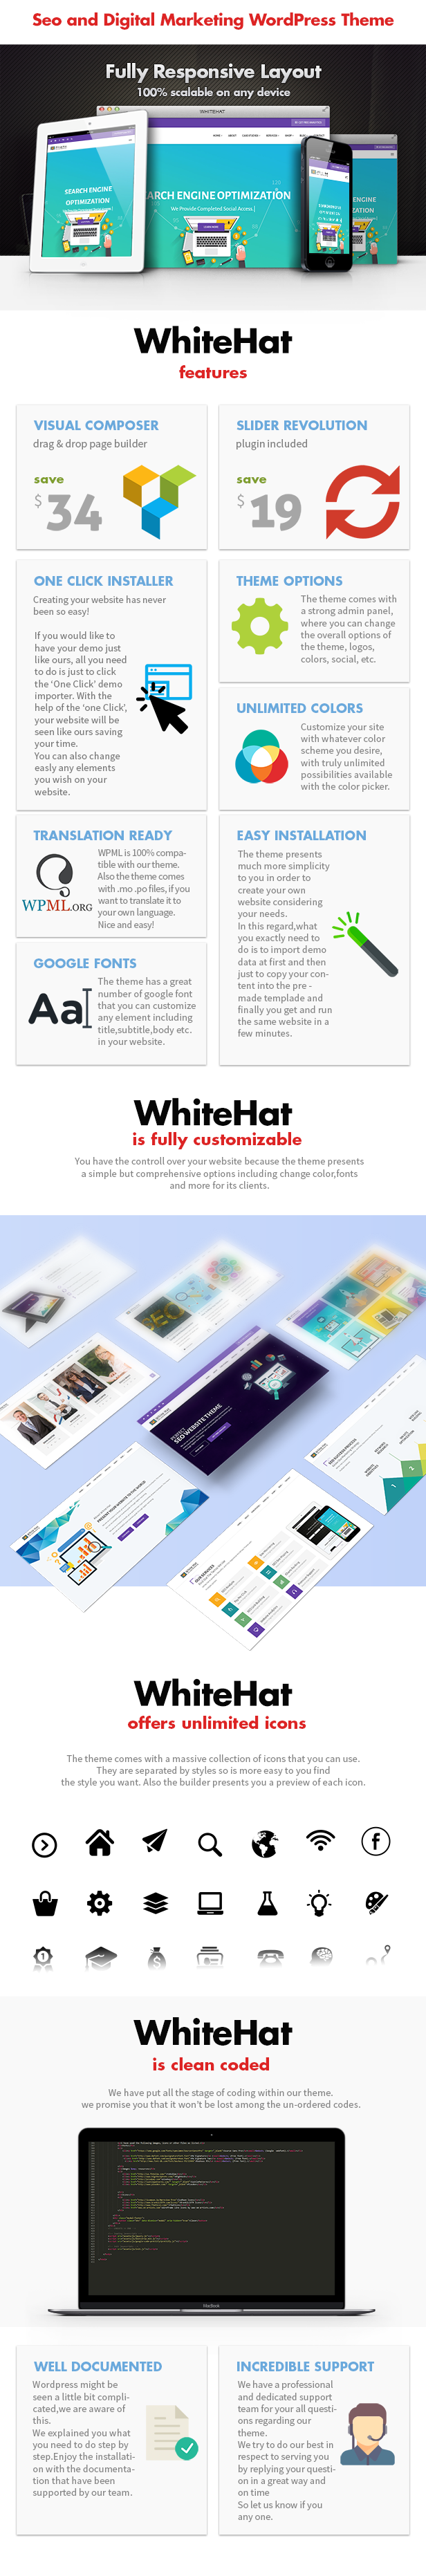 WhiteHat - Digital Marketing Theme - 3